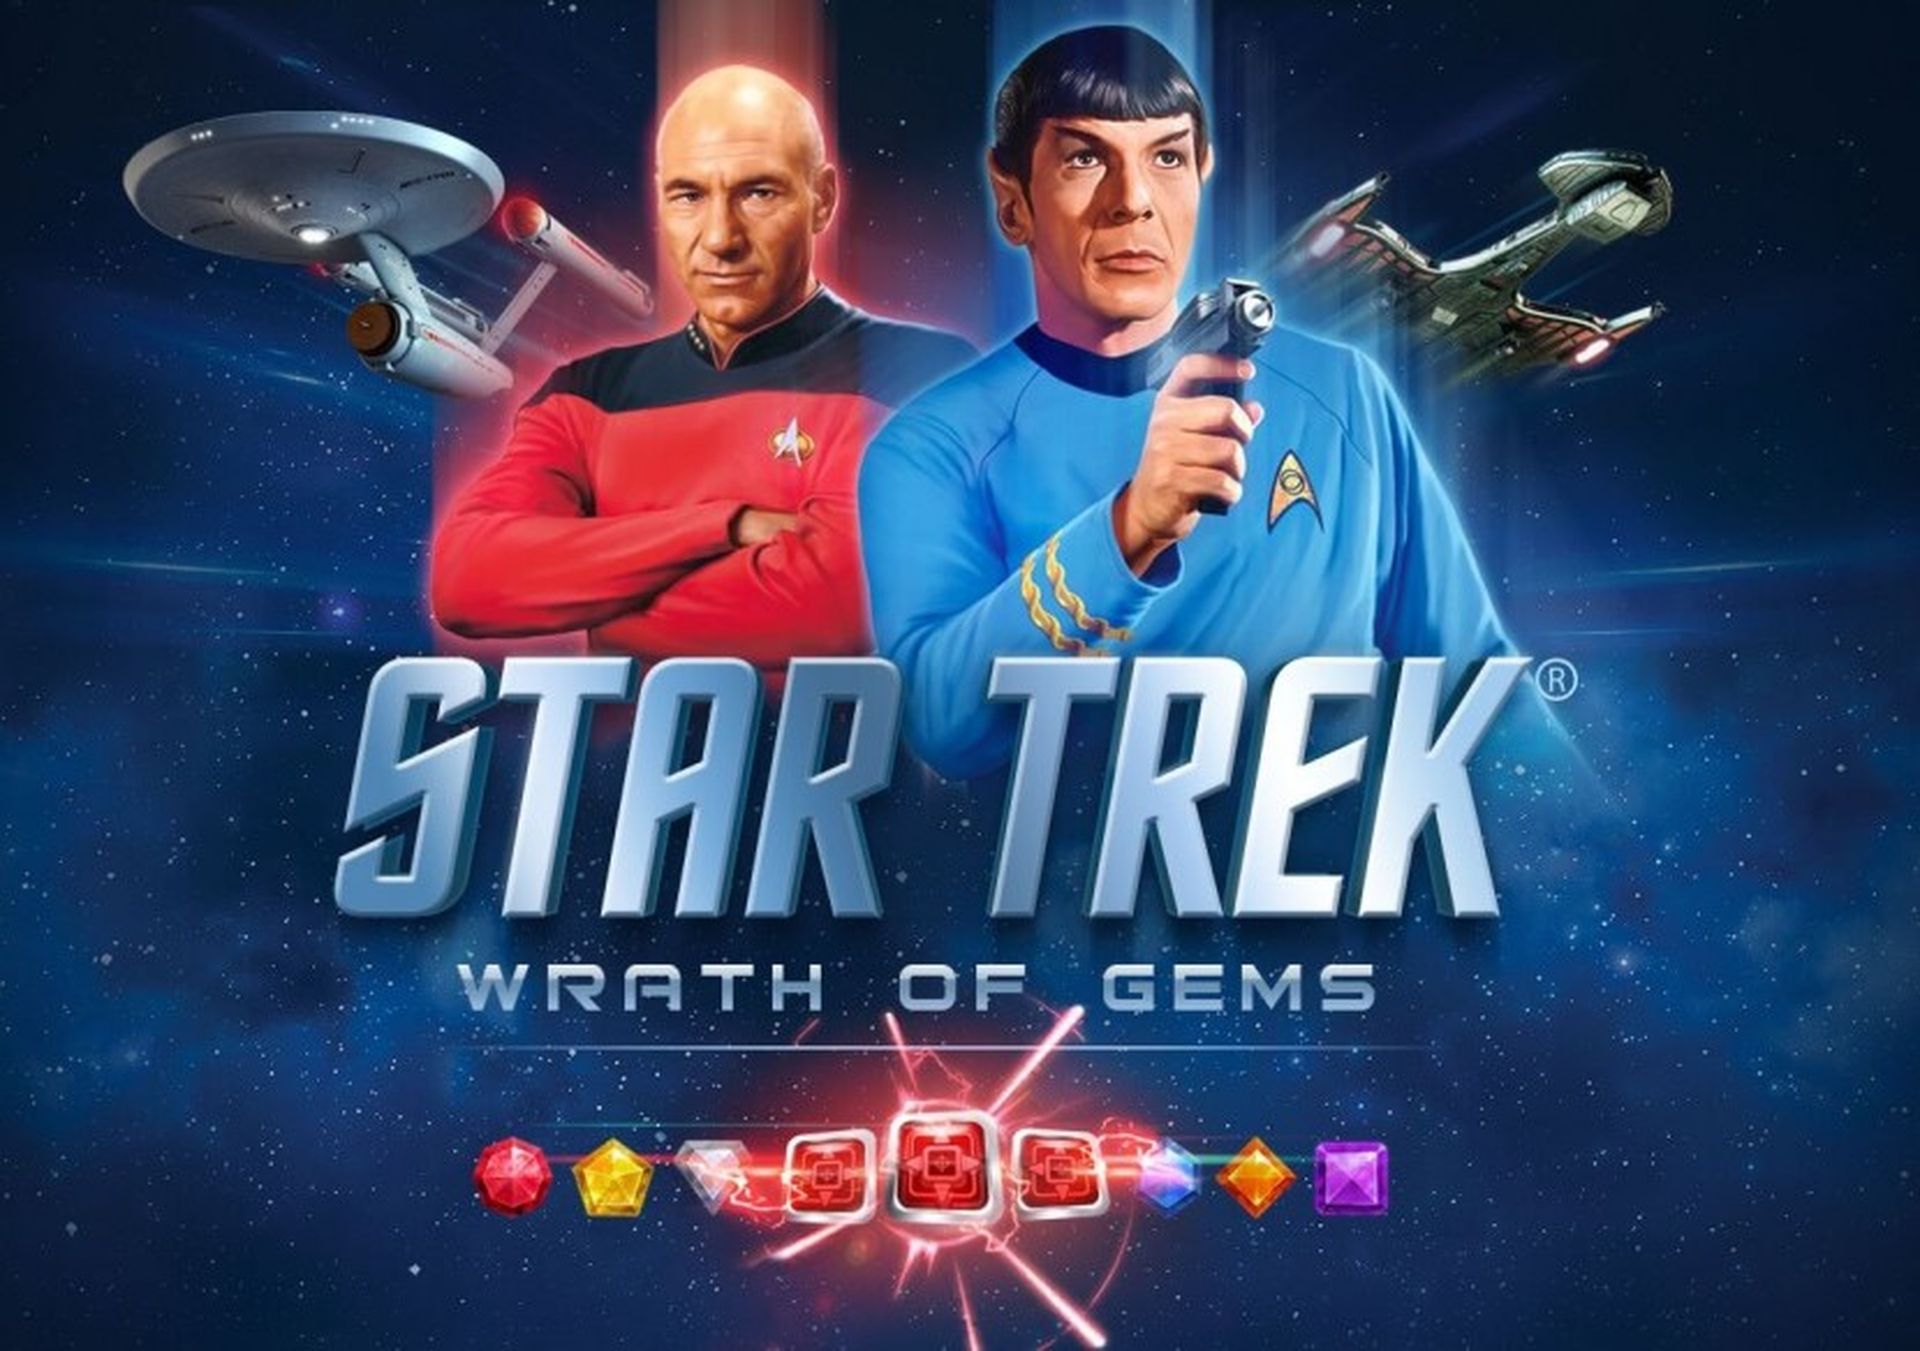 Star Trek Wrath of Gems